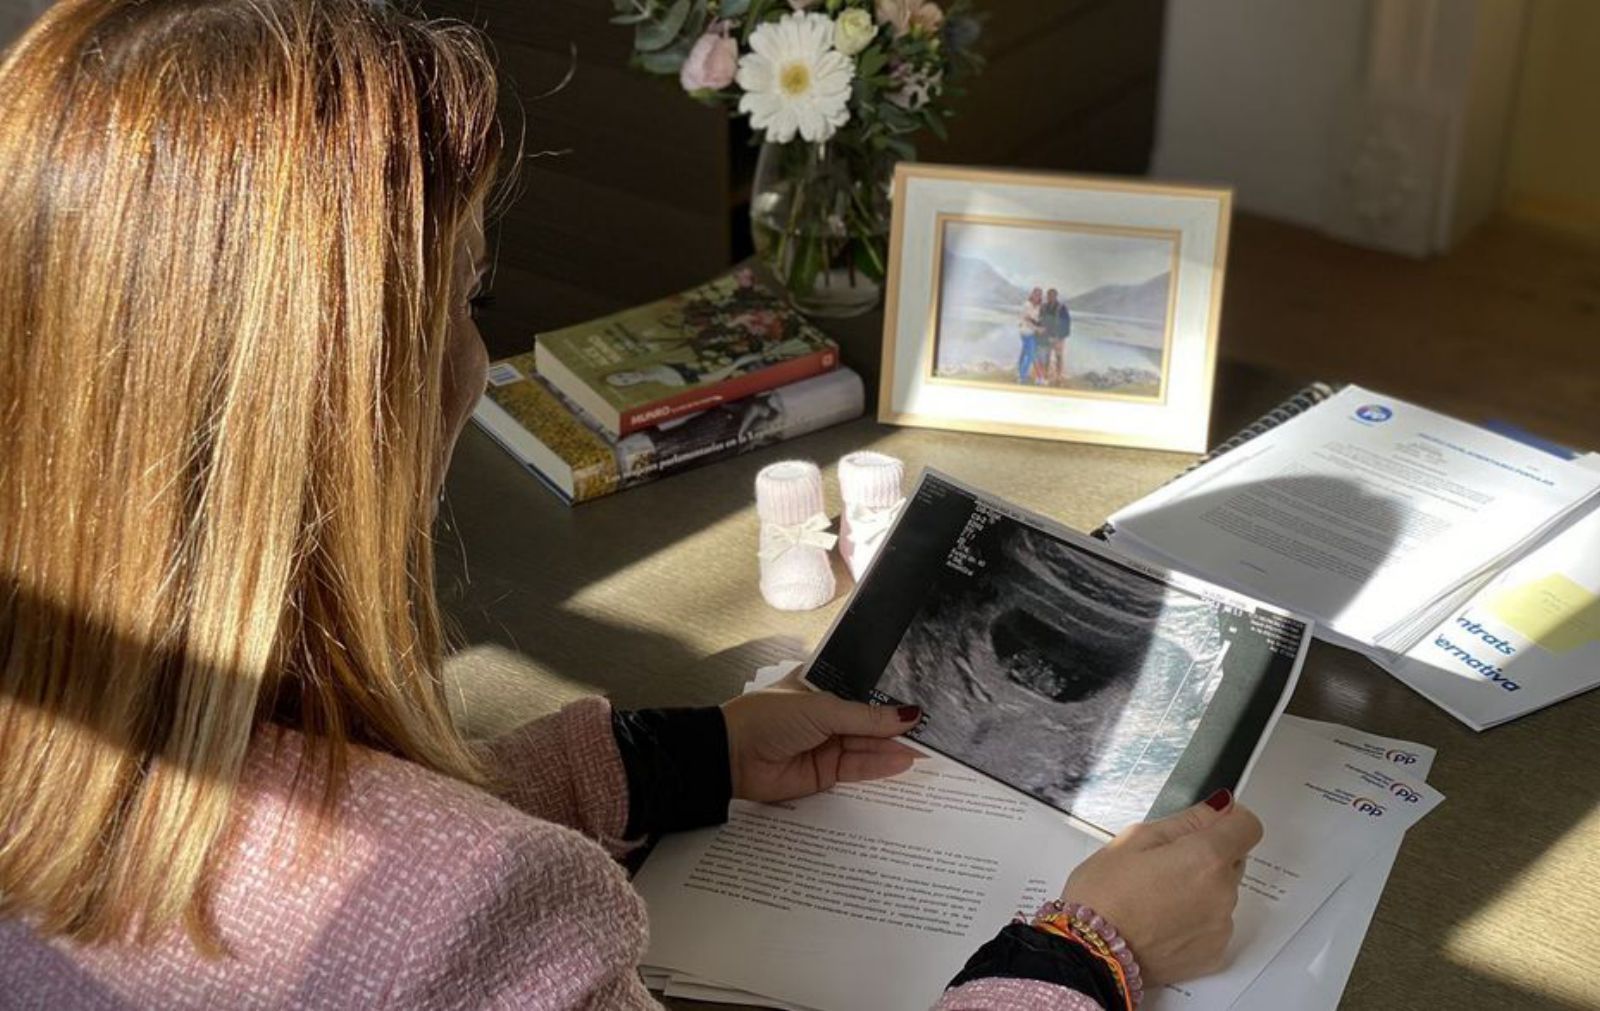 Marga Prohens observando la imagen de su futura hija. | TWITTER